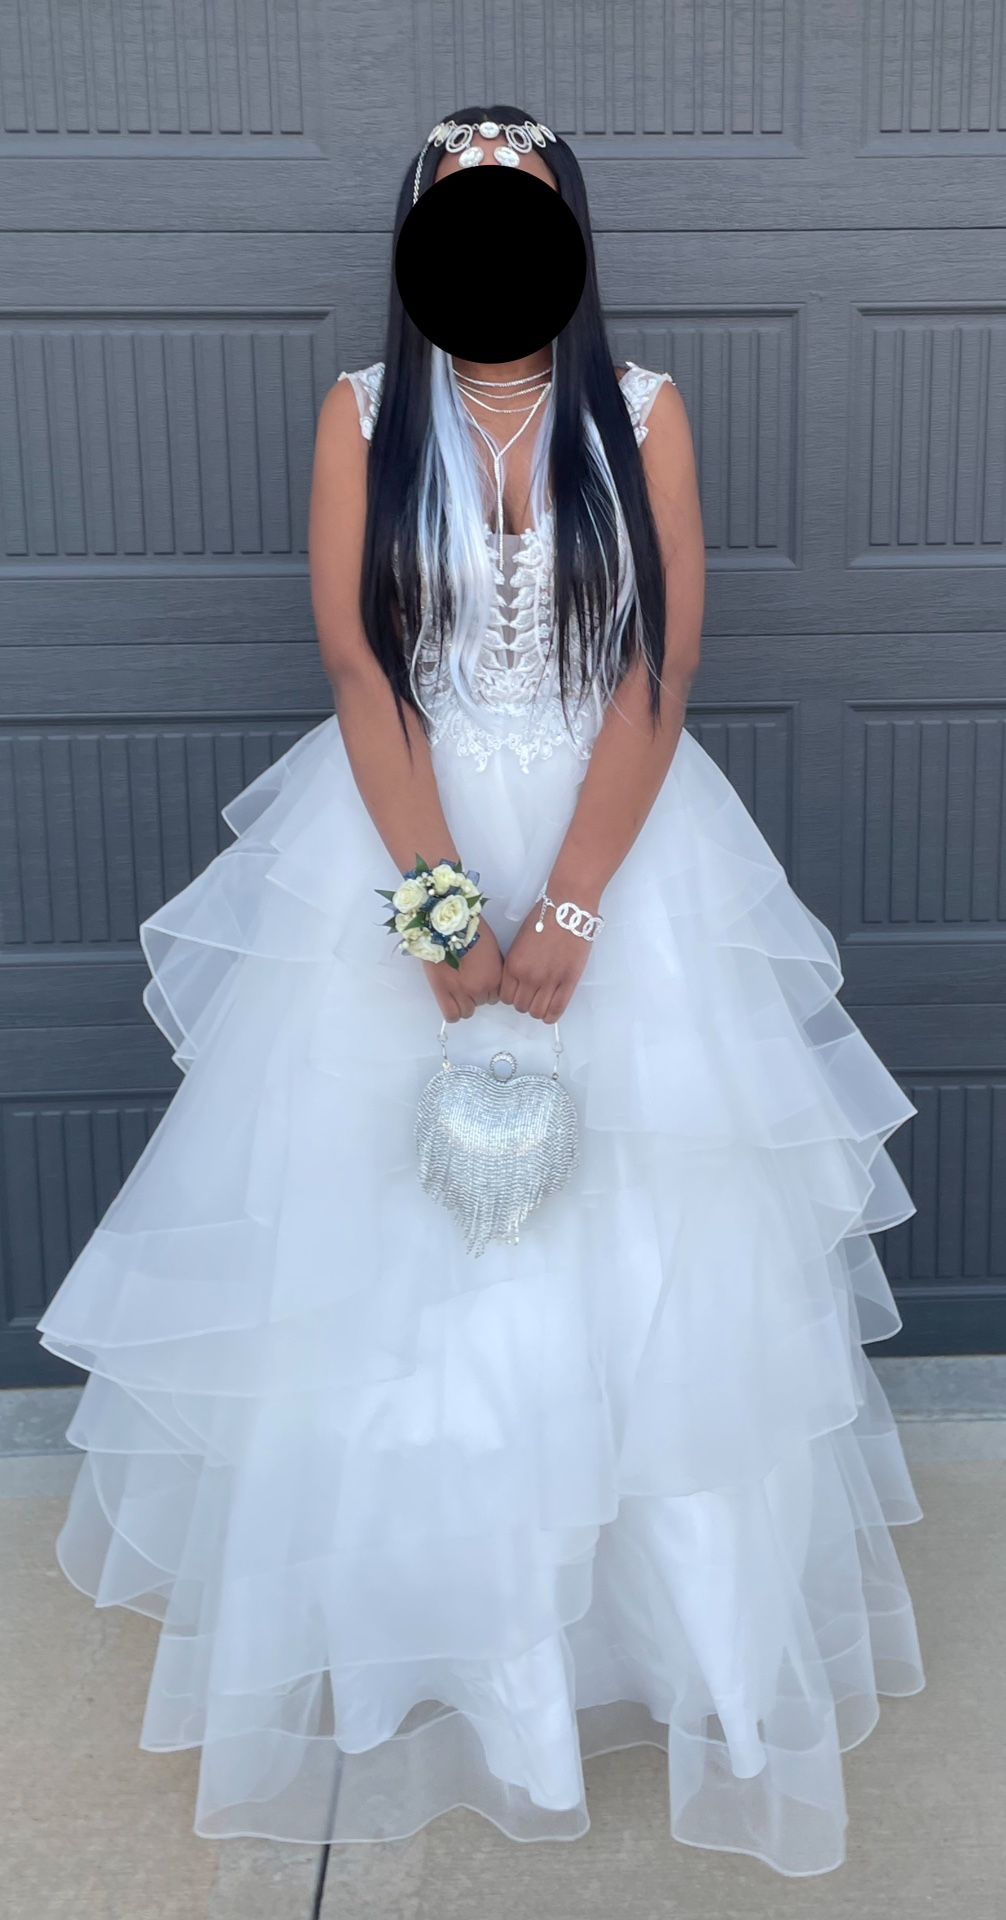 Stunning White Wedding/Prom Dress 